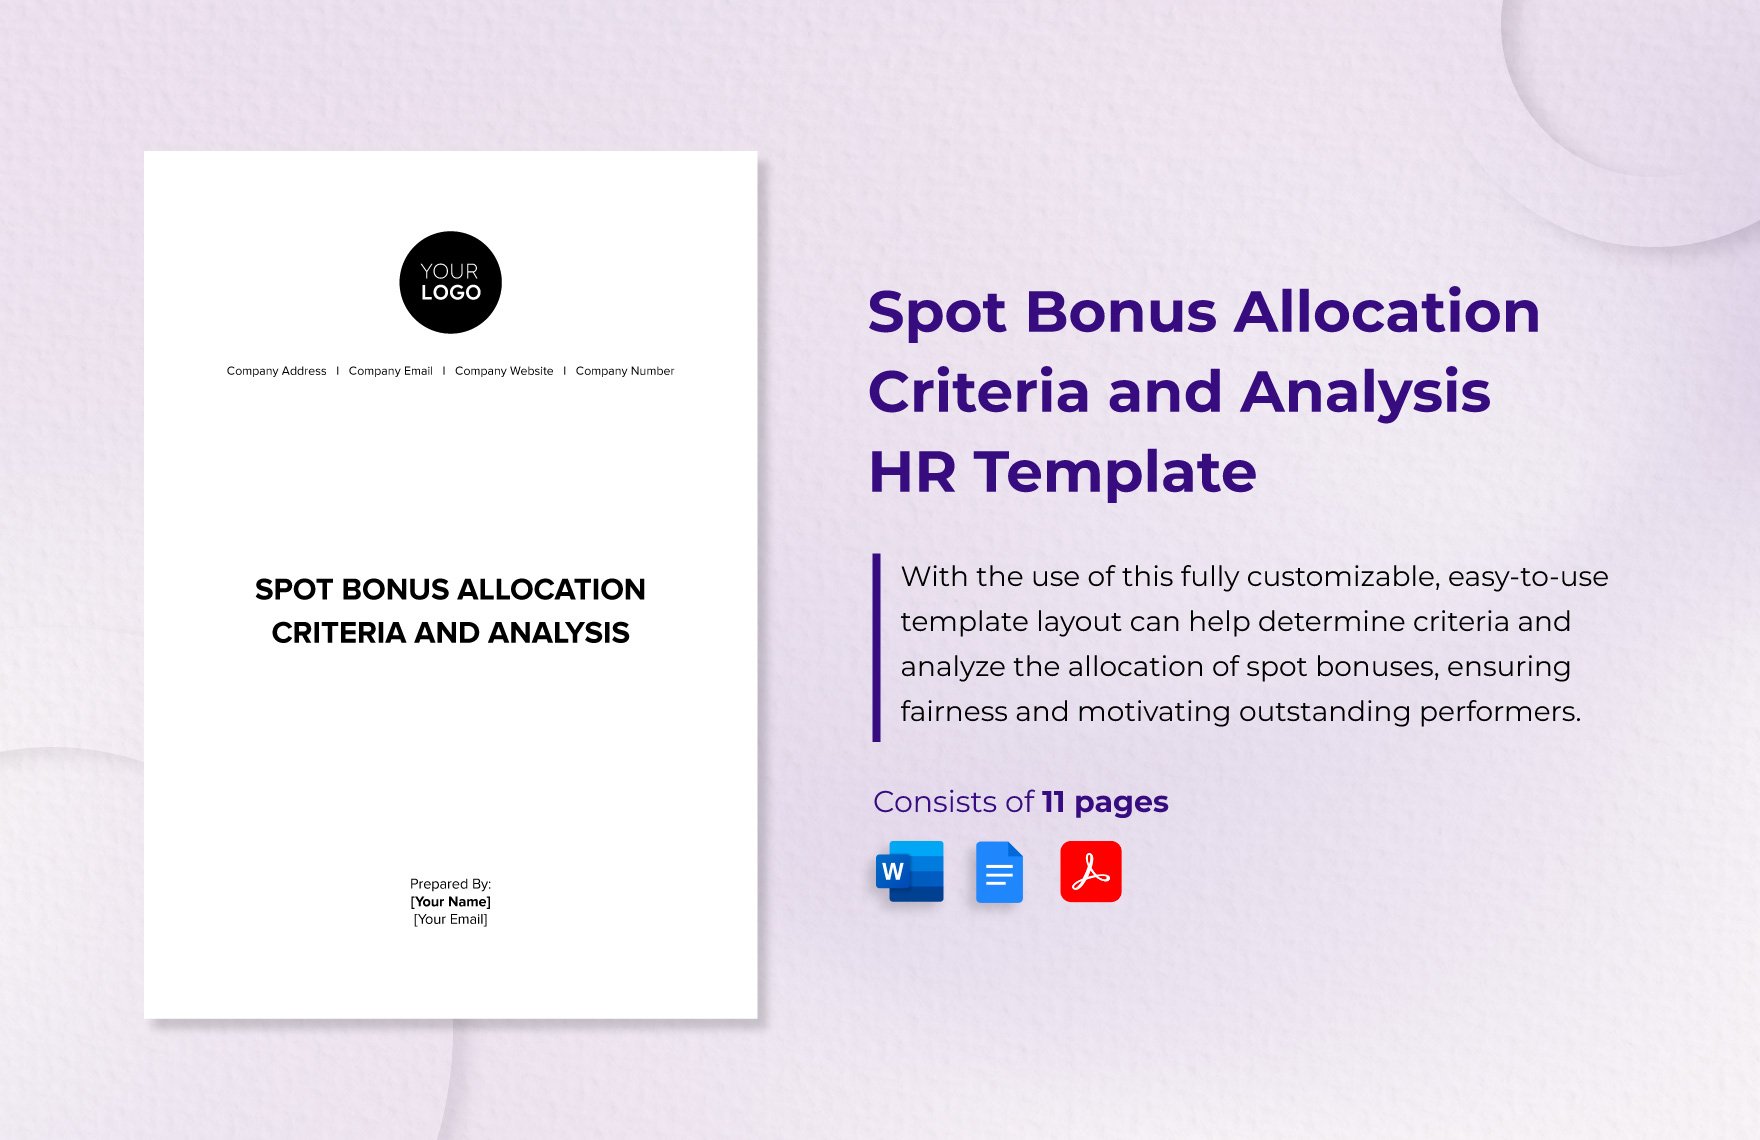 Spot Bonus Allocation Criteria and Analysis HR Template